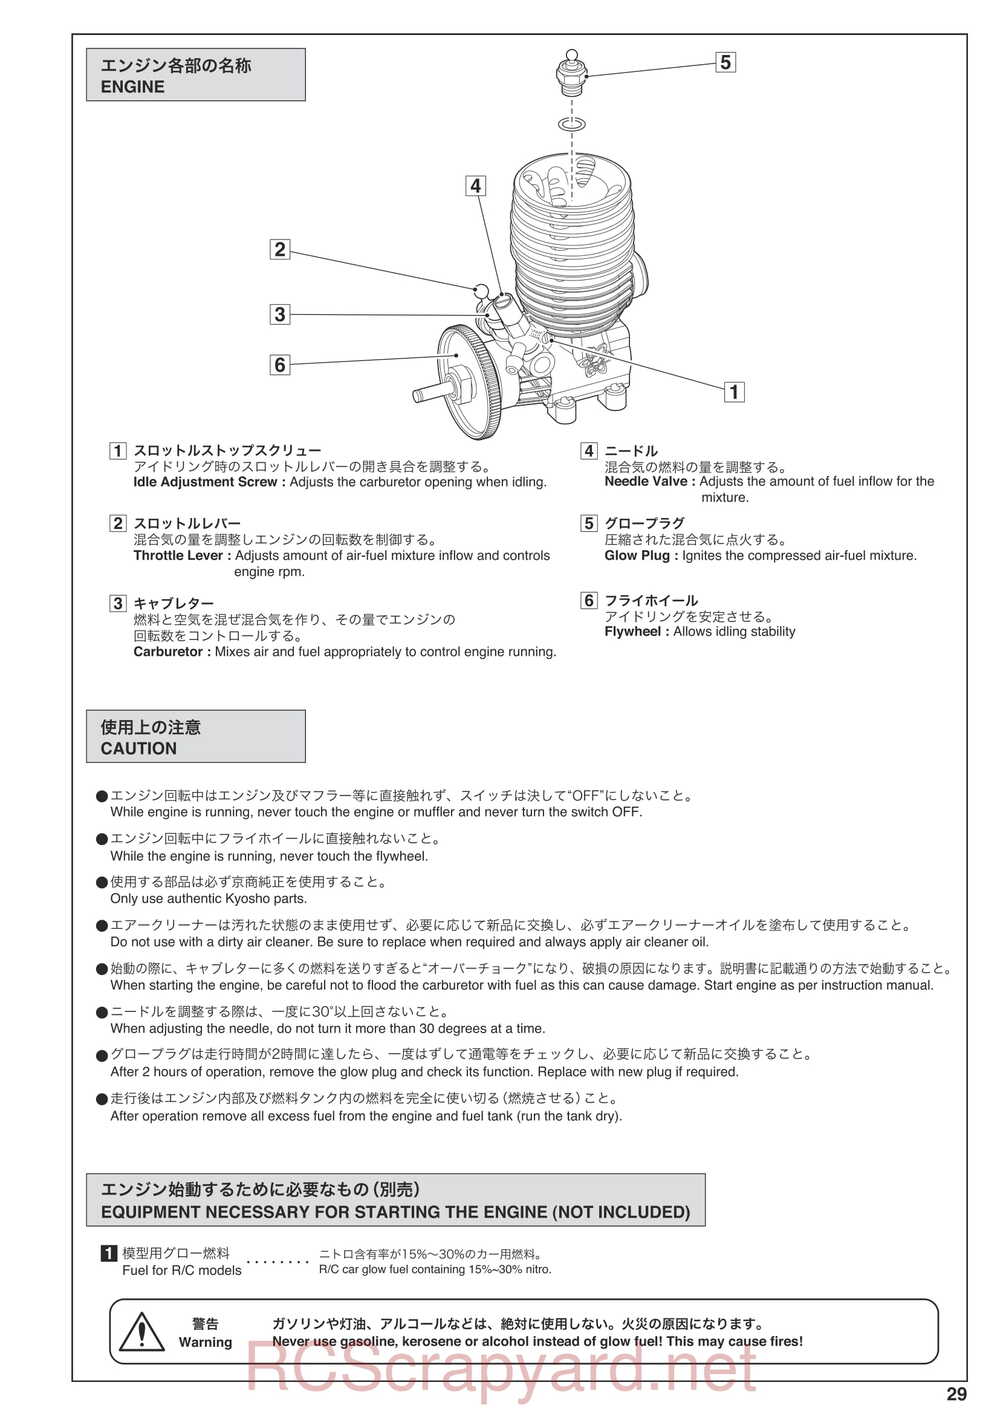 Kyosho - 31007 - KF01 - Manual - Page 29